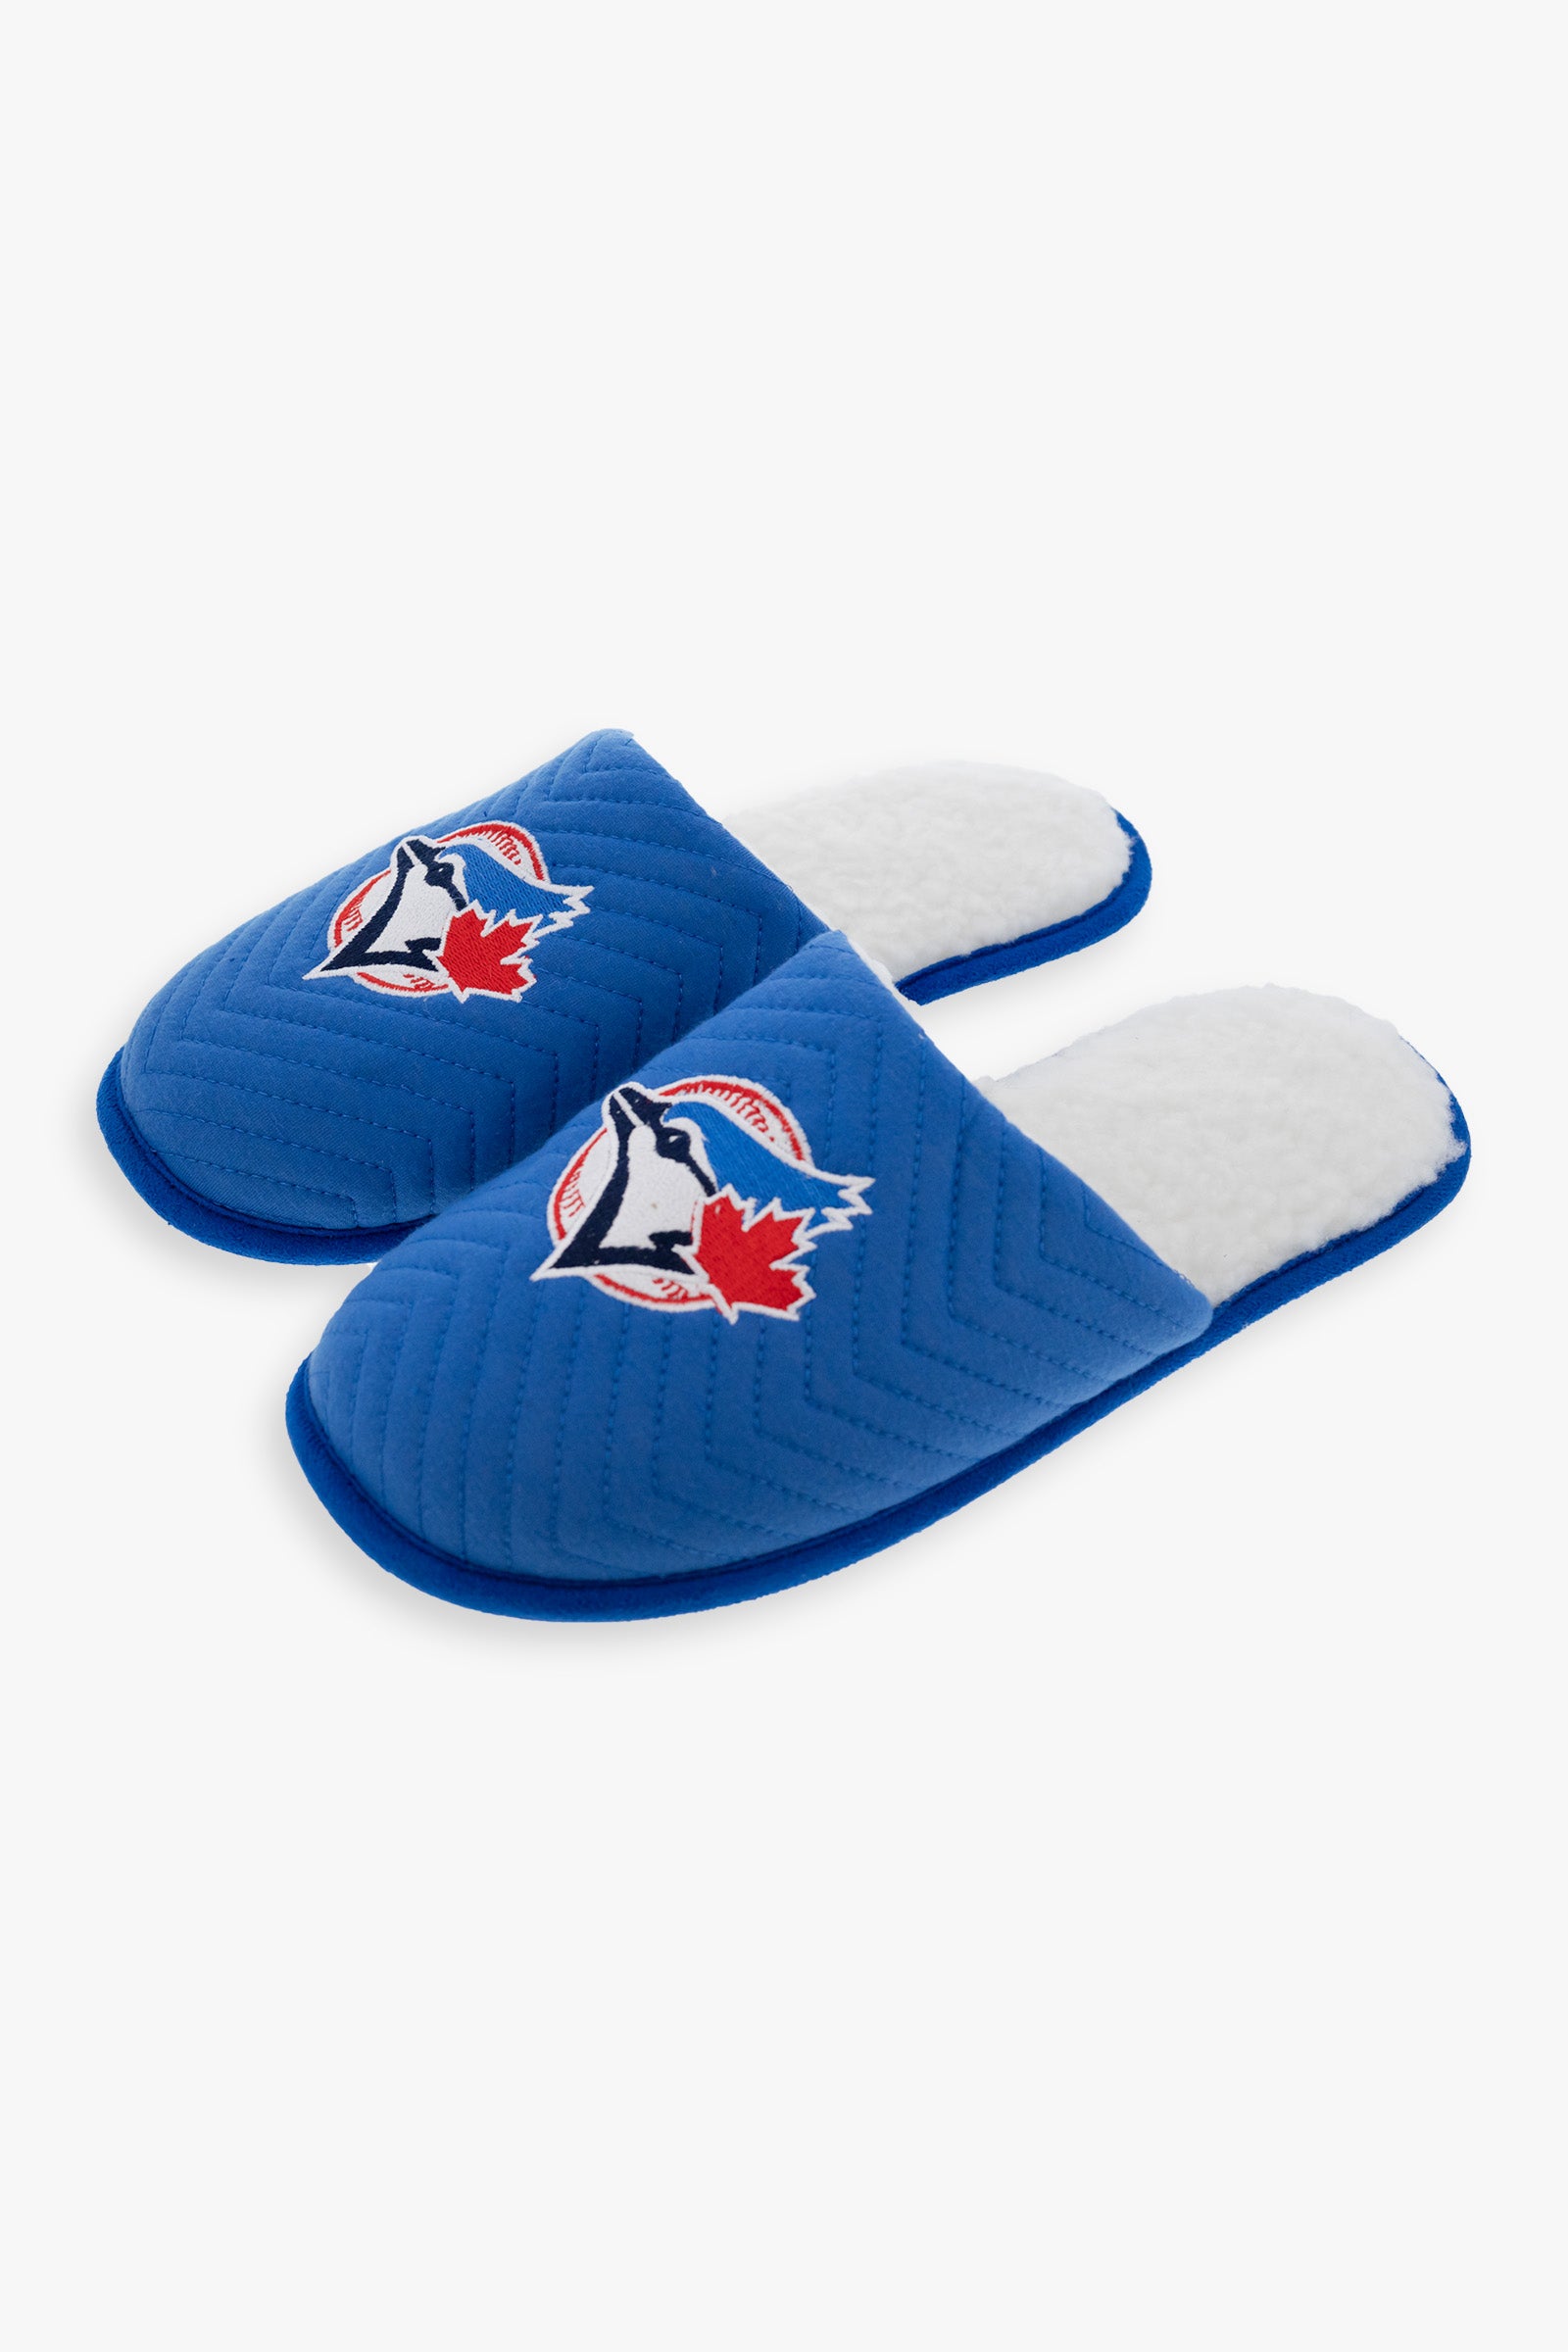 Gertex MLB Toronto Blue Jays Men's Winter Fuzzy Home Slippers